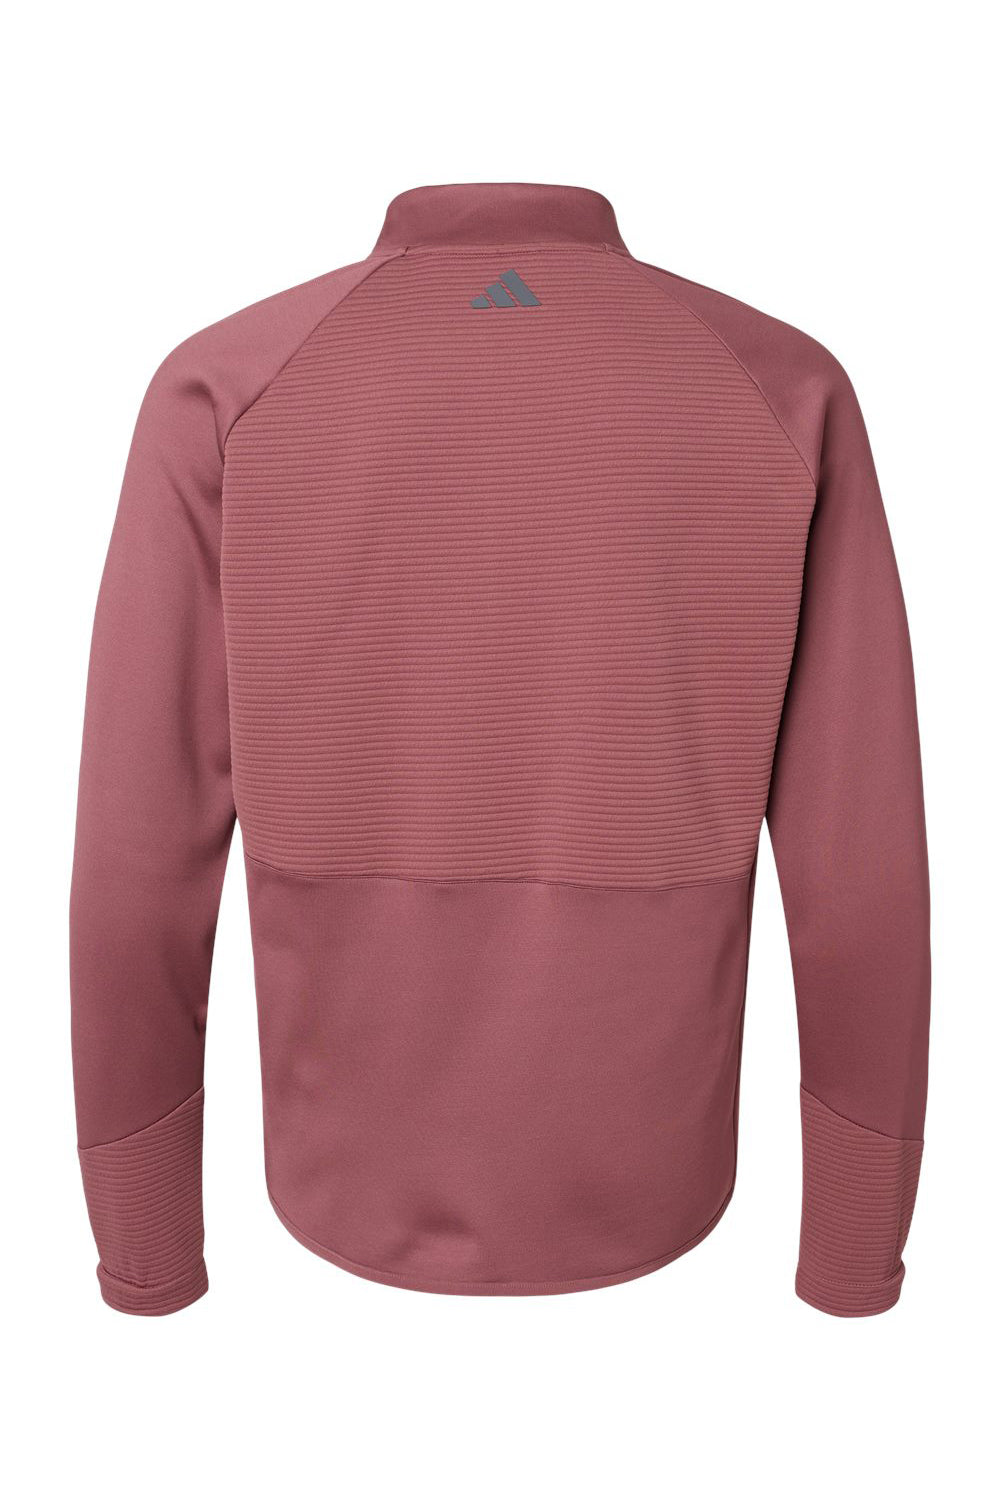 Adidas A587 Mens 1/4 Zip Sweatshirt Quiet Crimson Red Flat Back